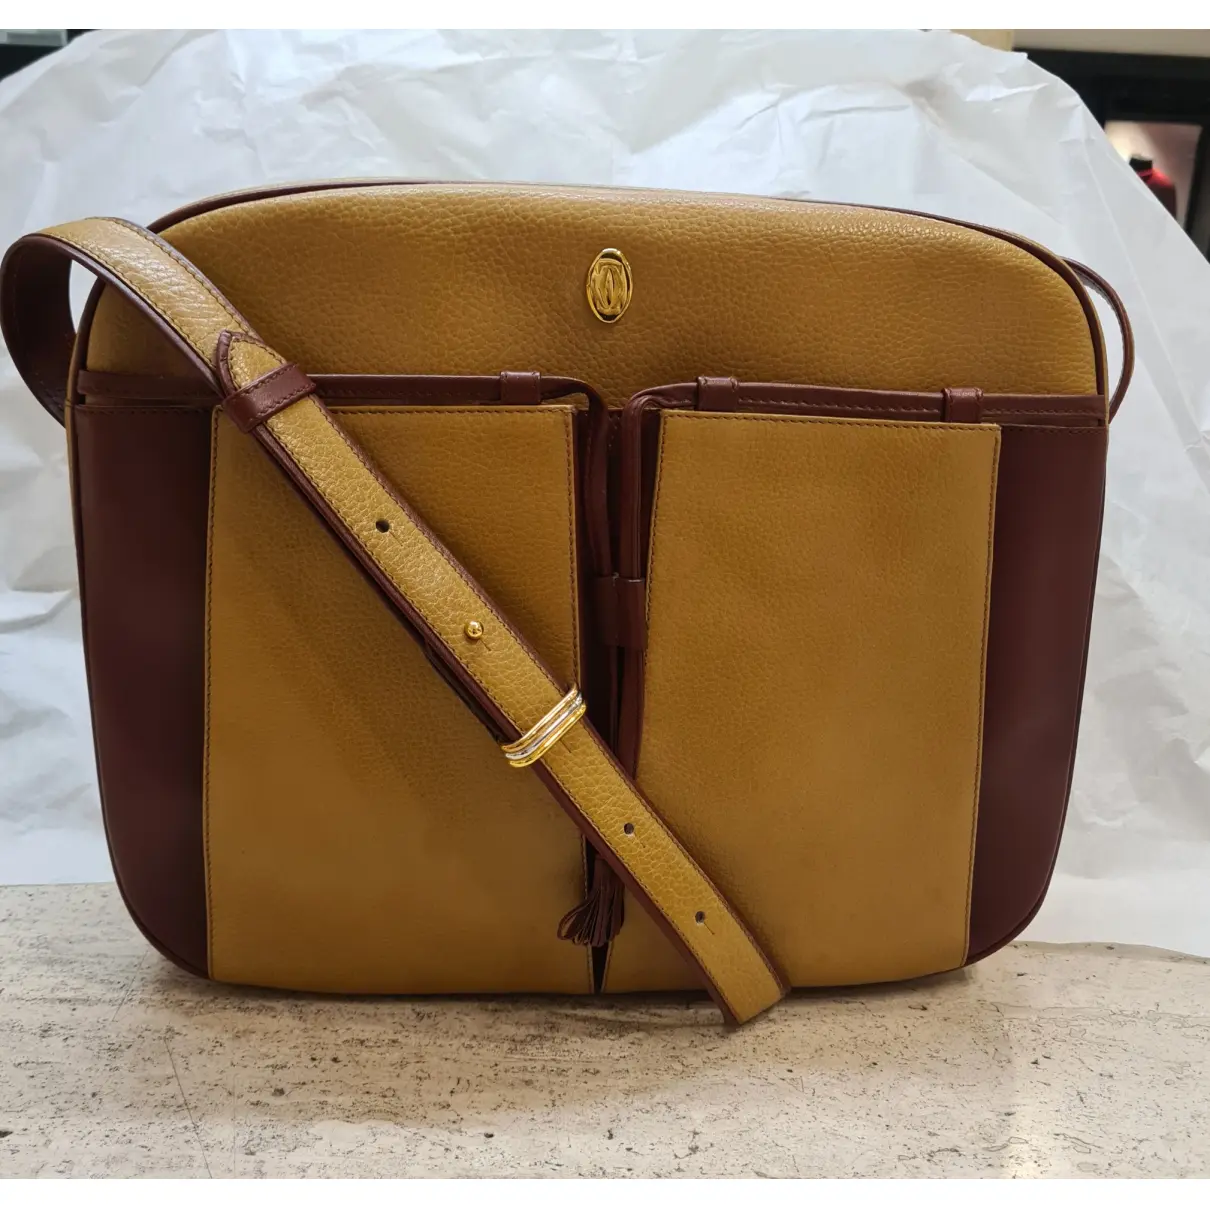 Buy Cartier Leather crossbody bag online - Vintage